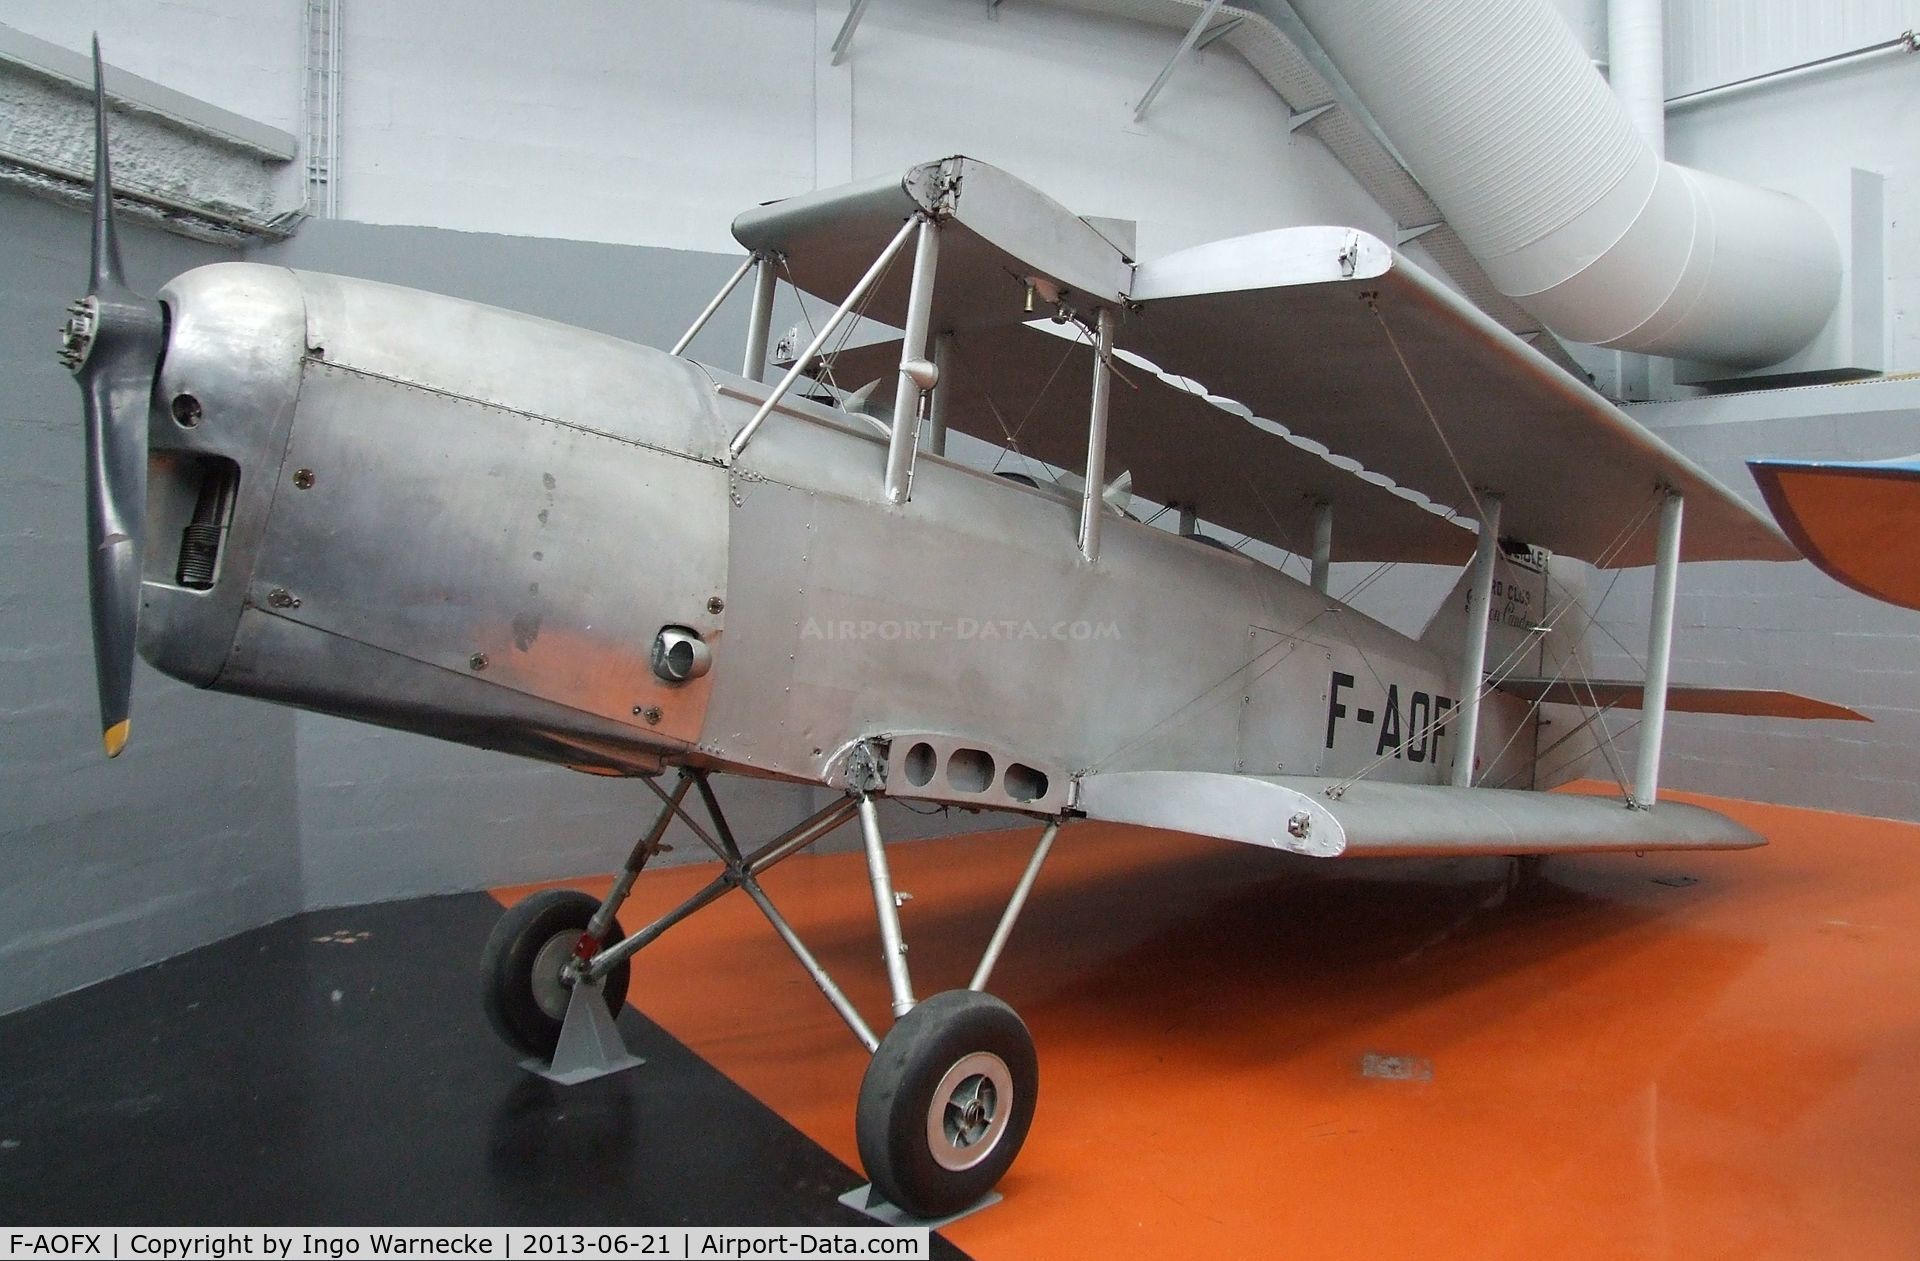 F-AOFX, Caudron C.277R Luciole C/N 7156/14, Caudron C.277R Luciole at the Musee de l'Air, Paris/Le Bourget